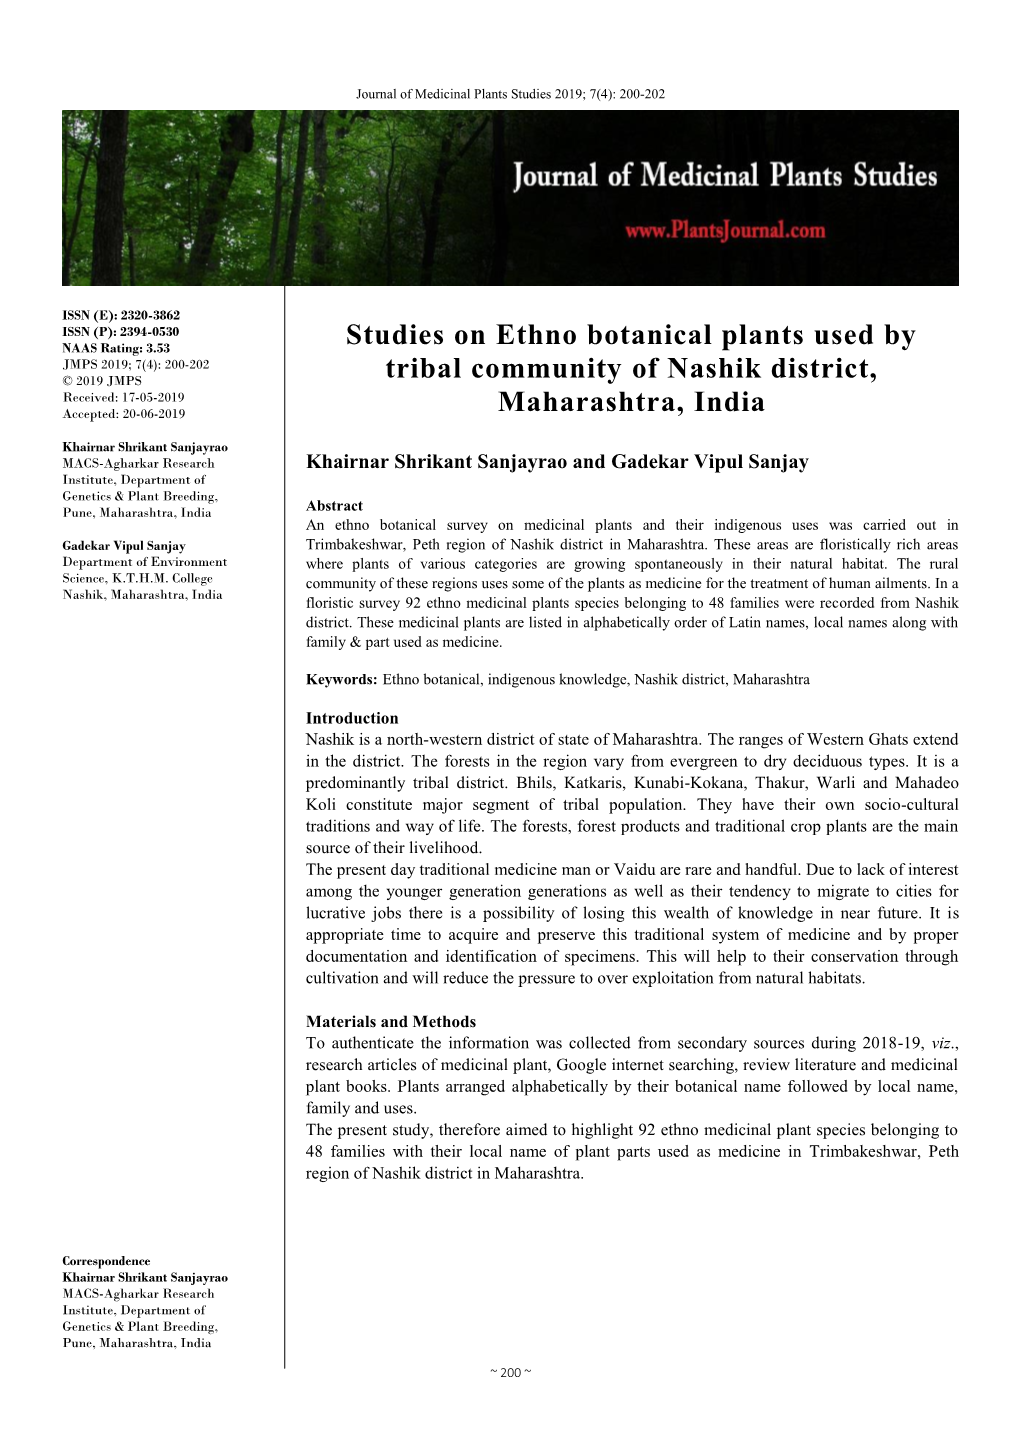 Studies on Ethno Botanical Plants Used by Tribal Community of Nashik